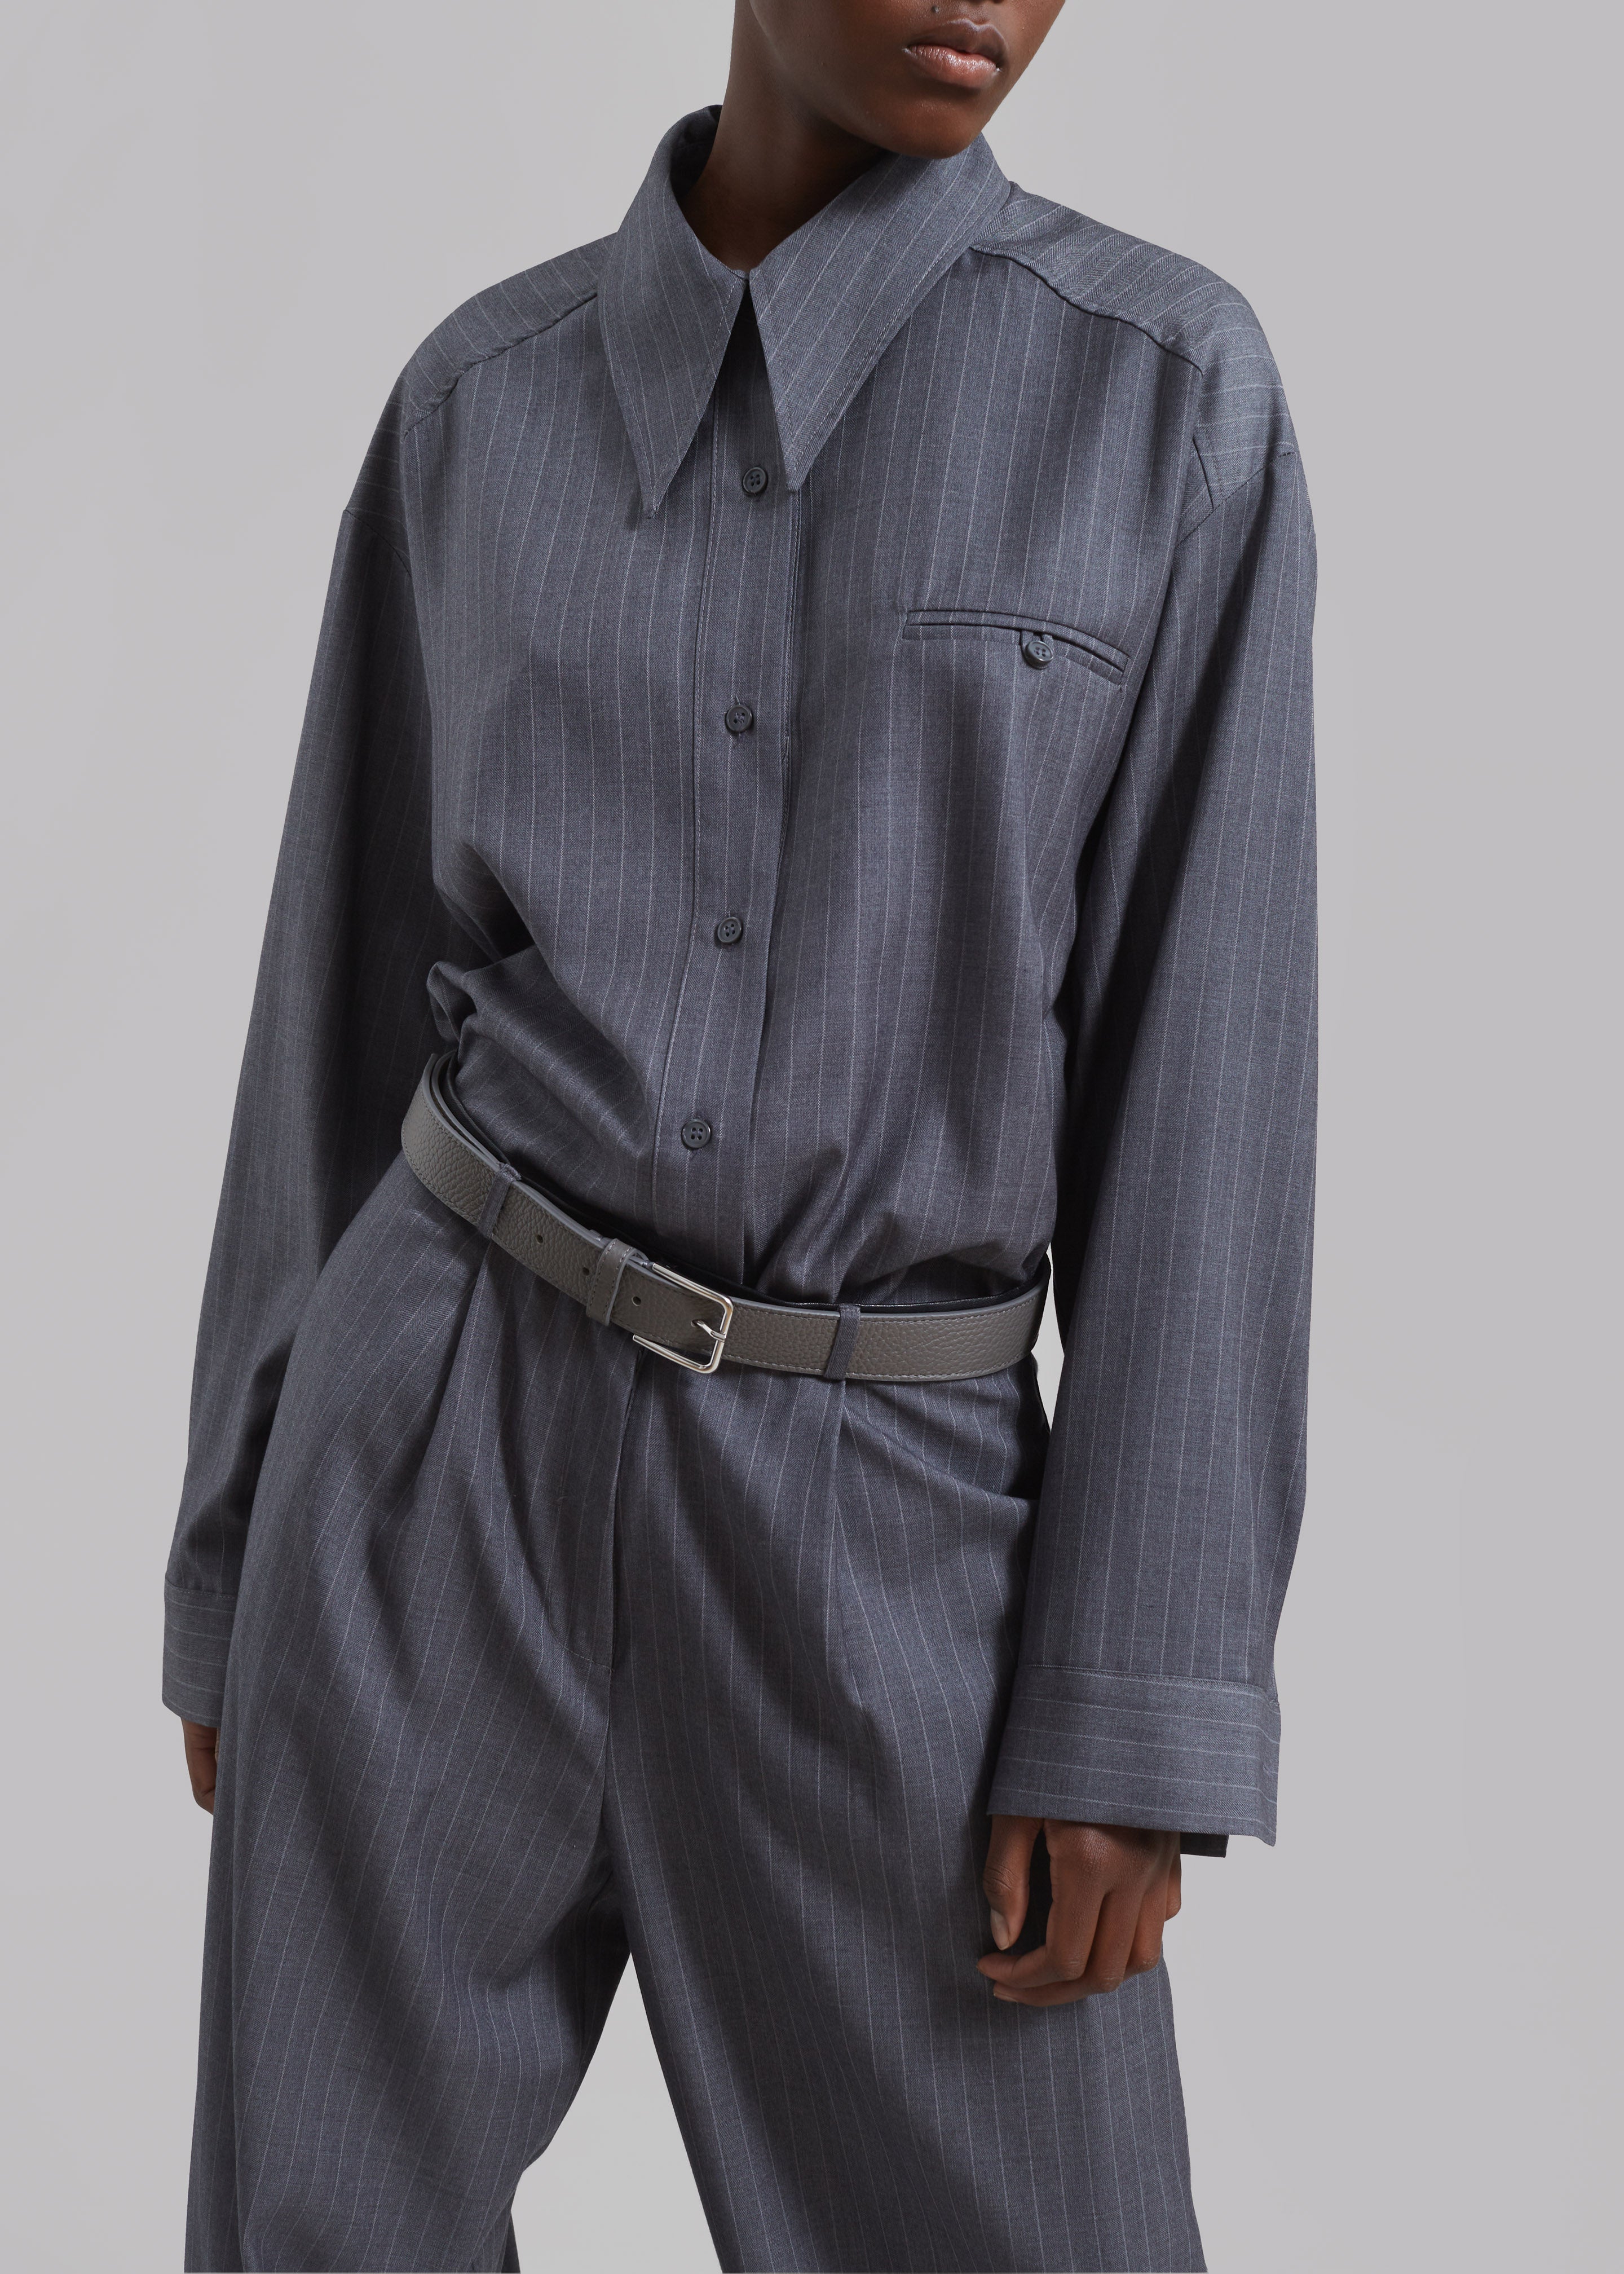 Kerry Button Up Shirt - Grey Pinstripe - 5